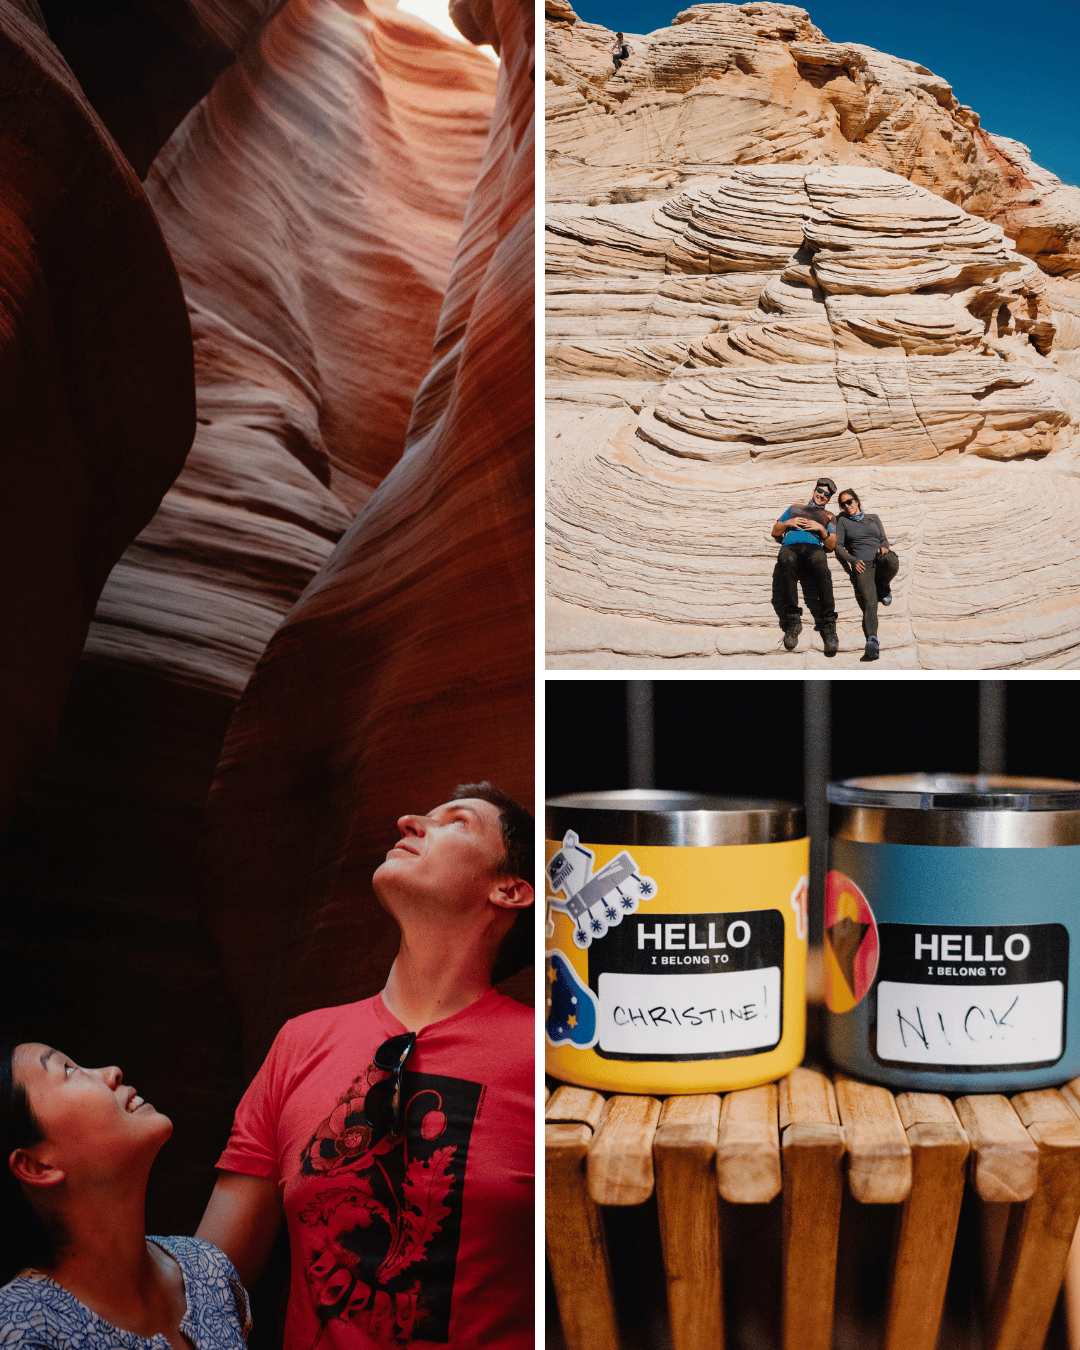 the couple exploring Antelope canyon, the customized mugs